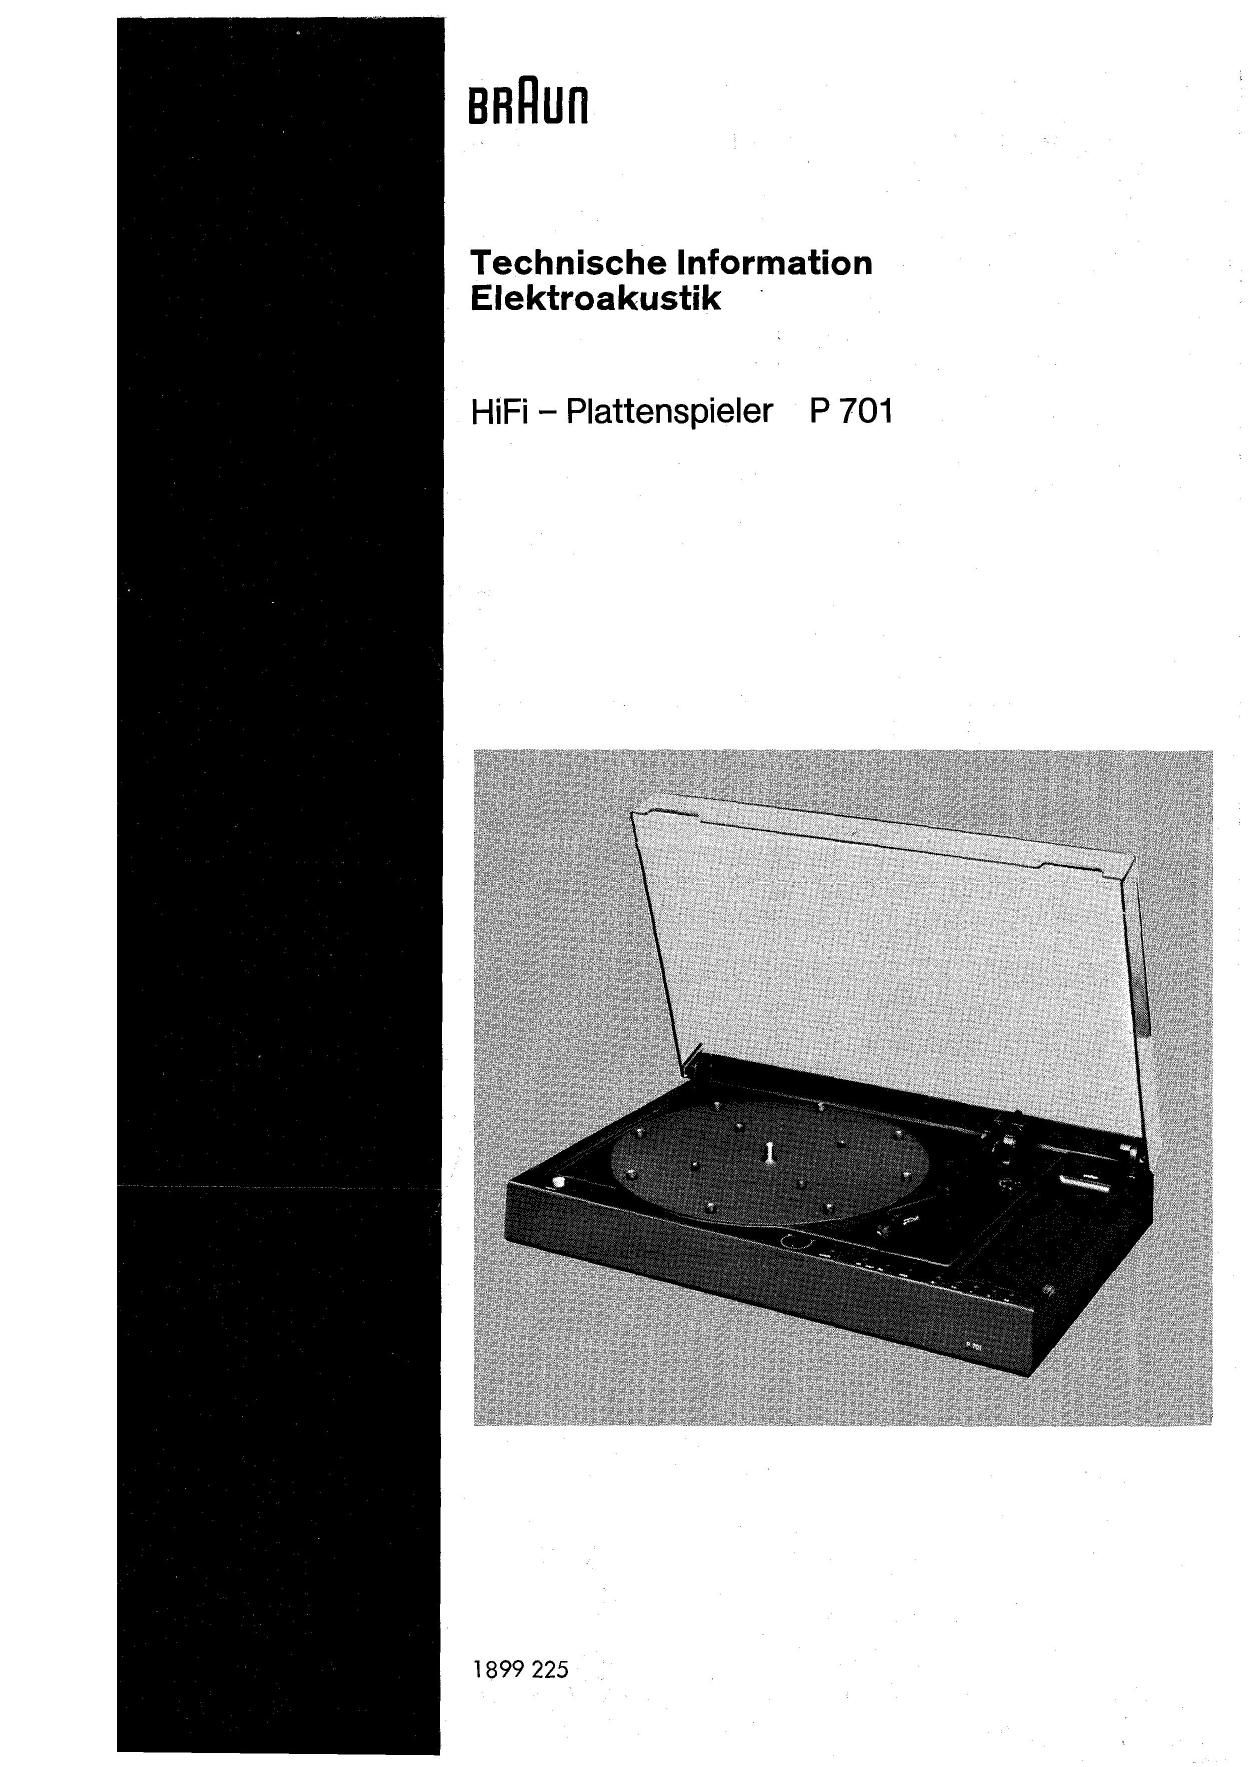 Service Manual-Anleitung für Braun AP 701 